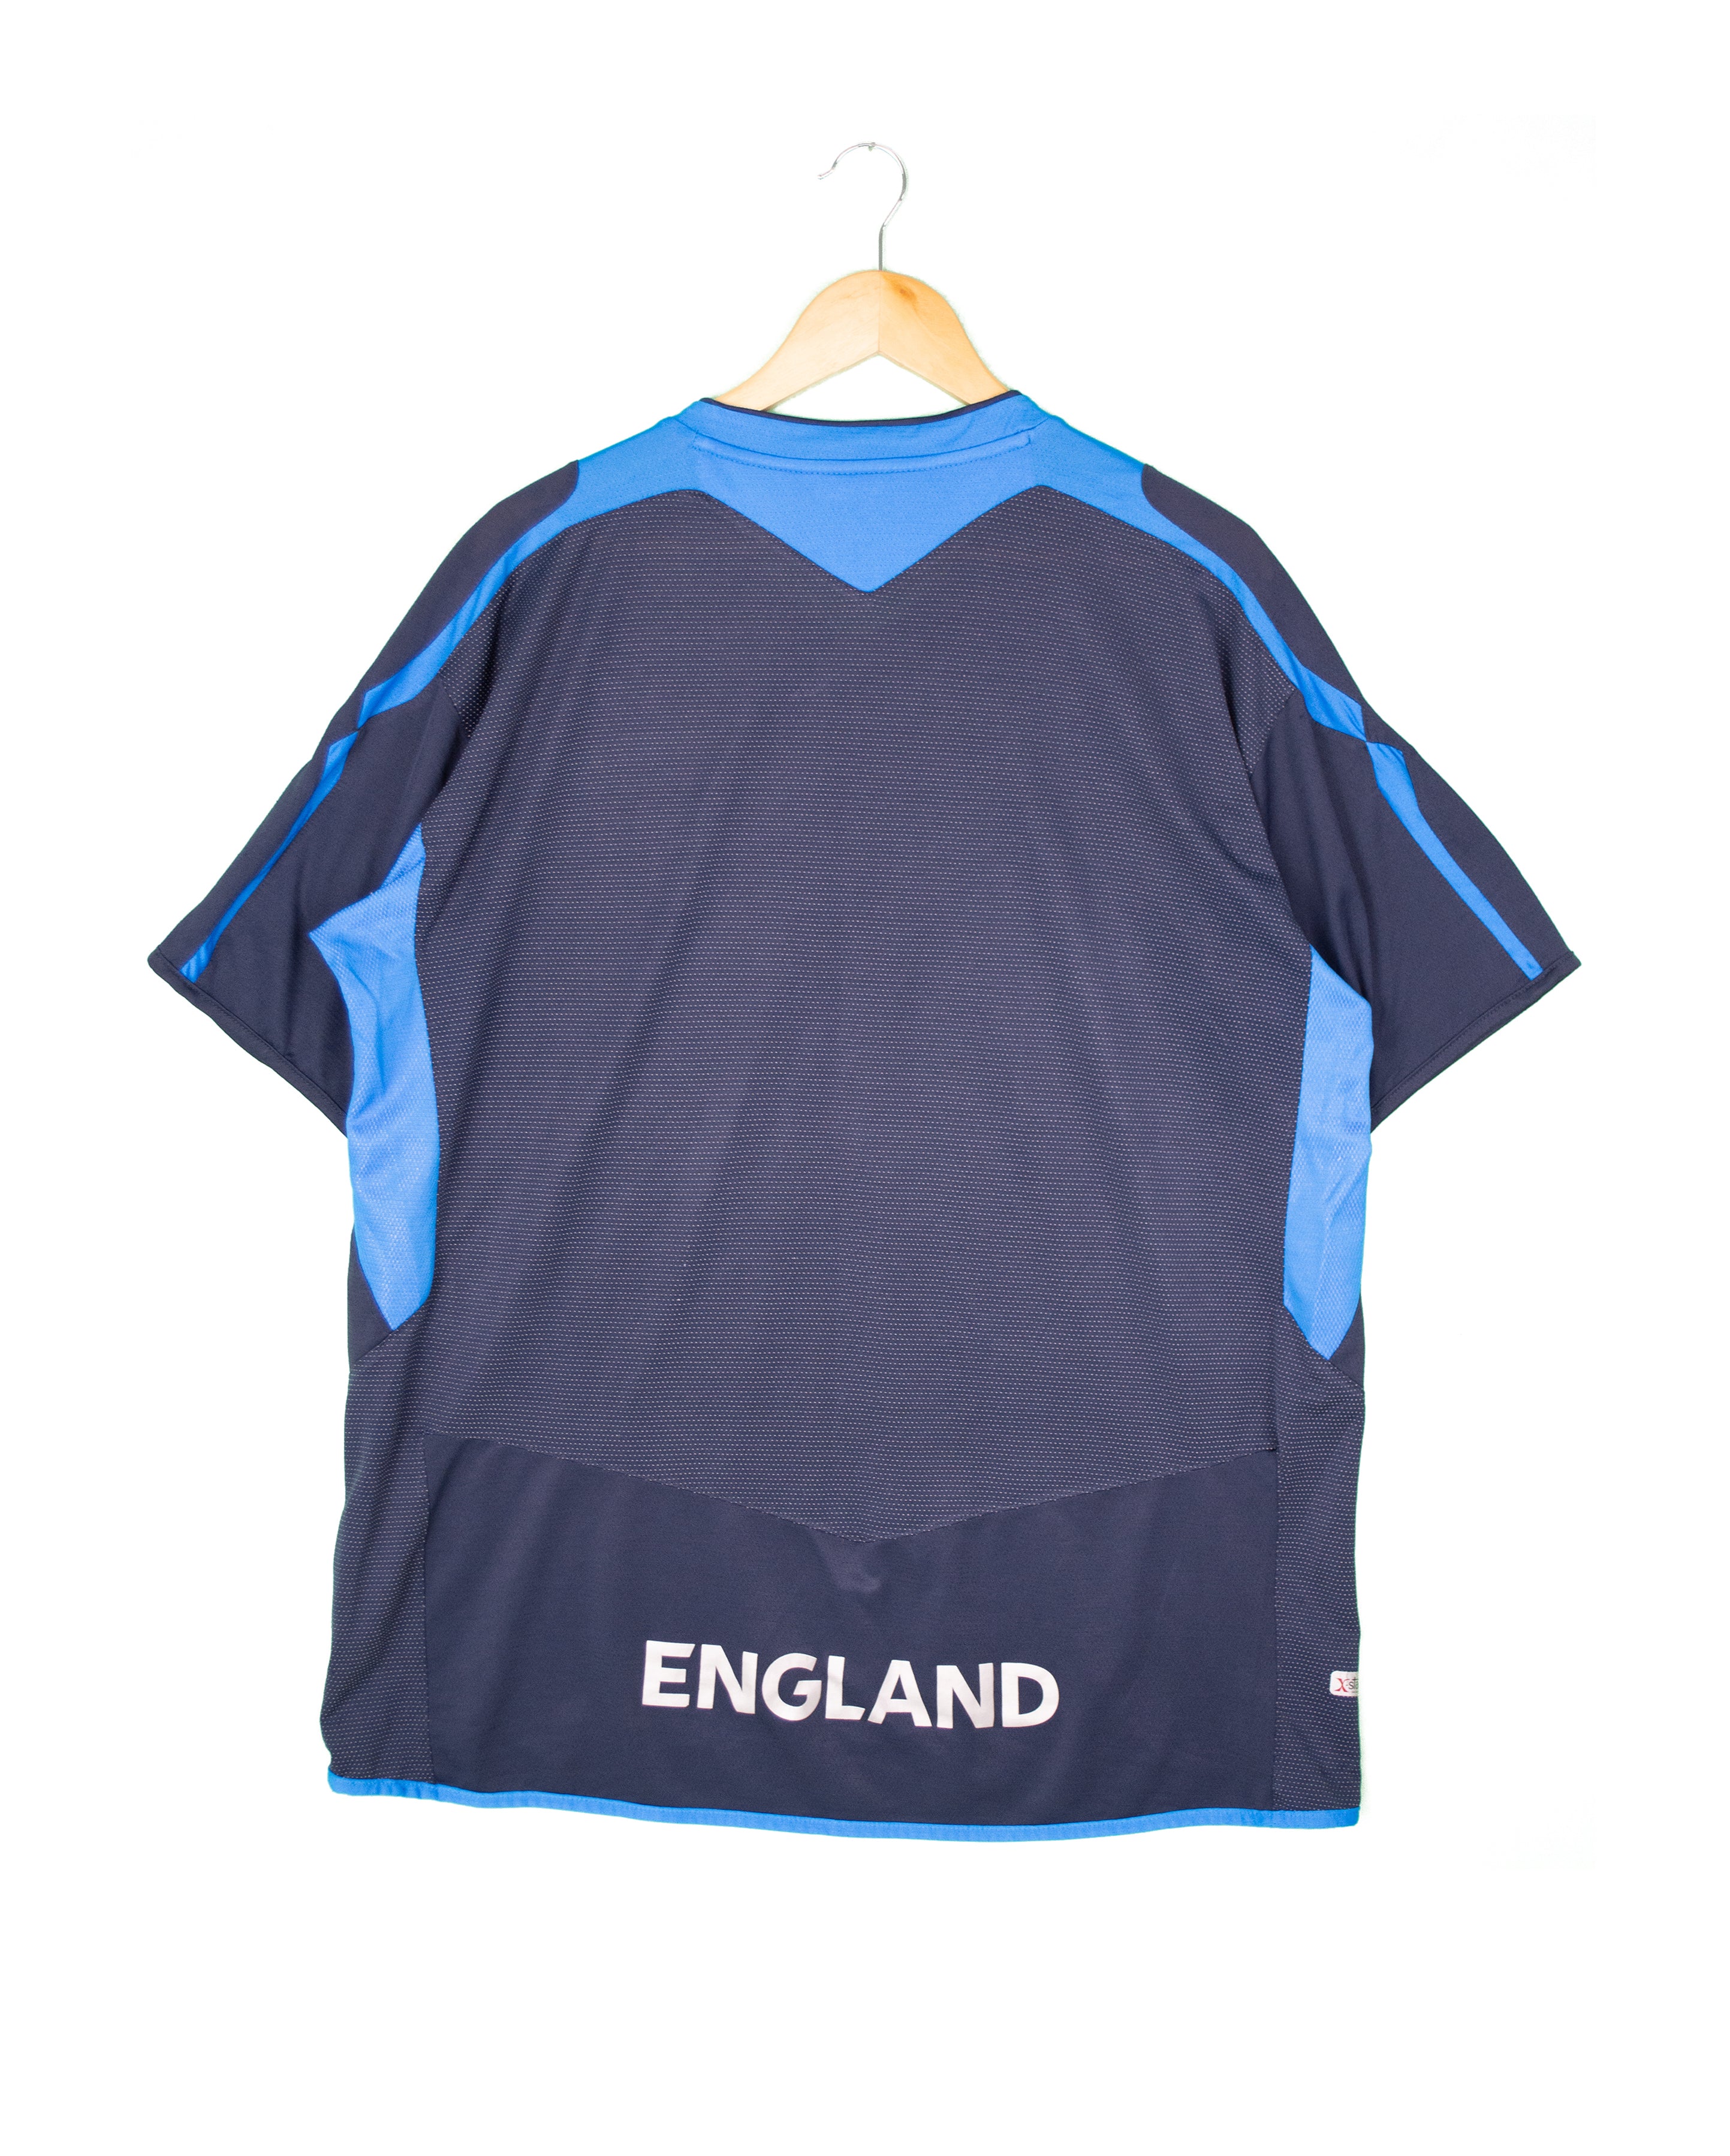 England Training Shirt - XL - #1502